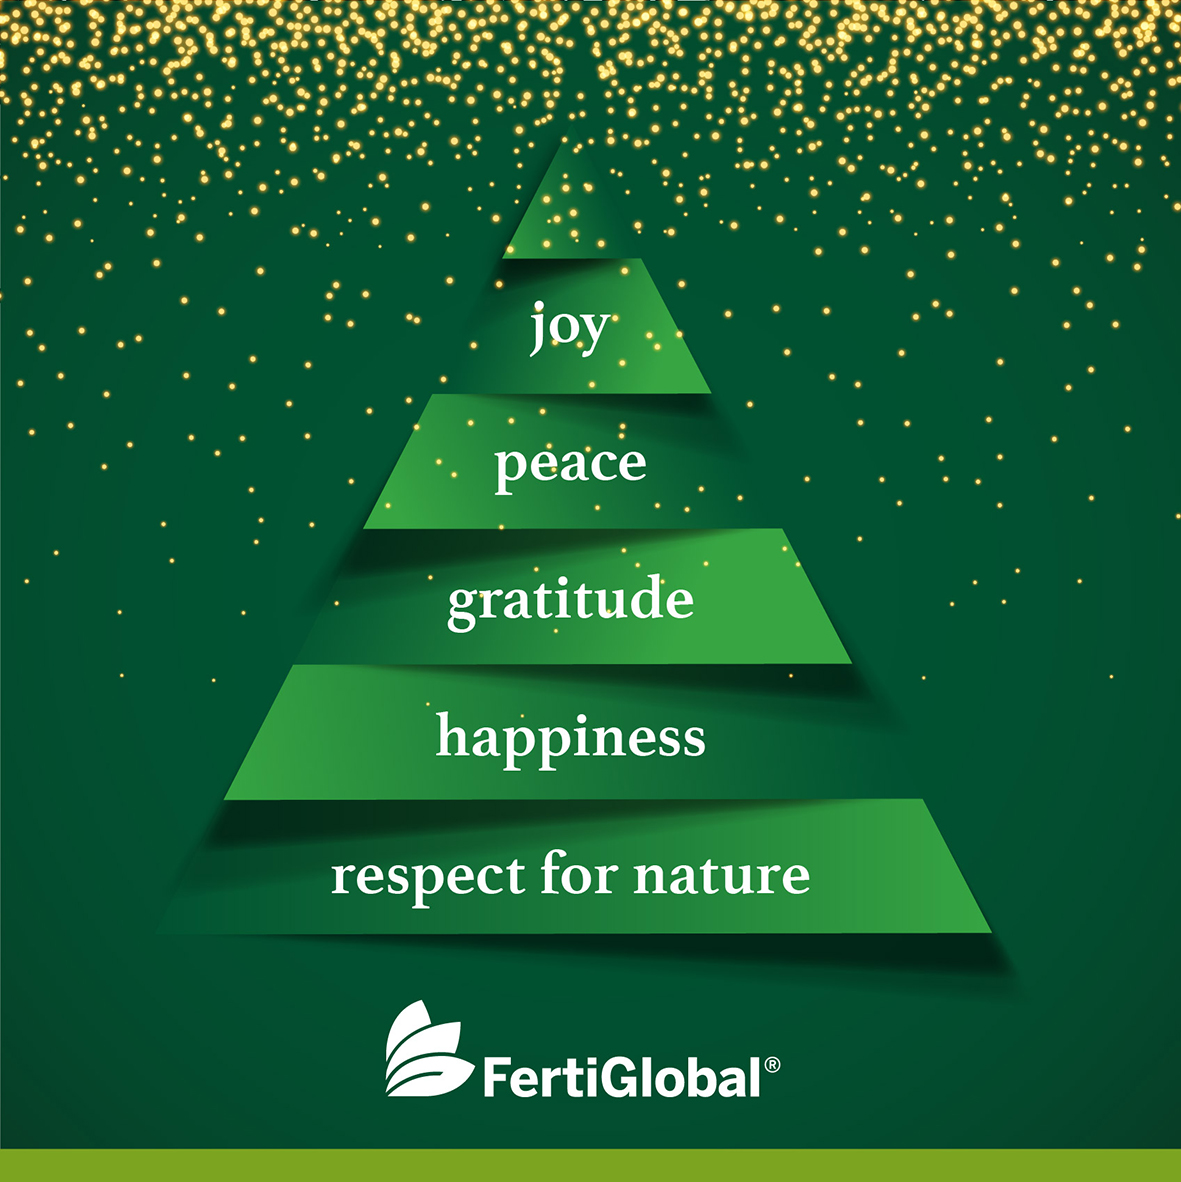 FertiGlobal season greetings